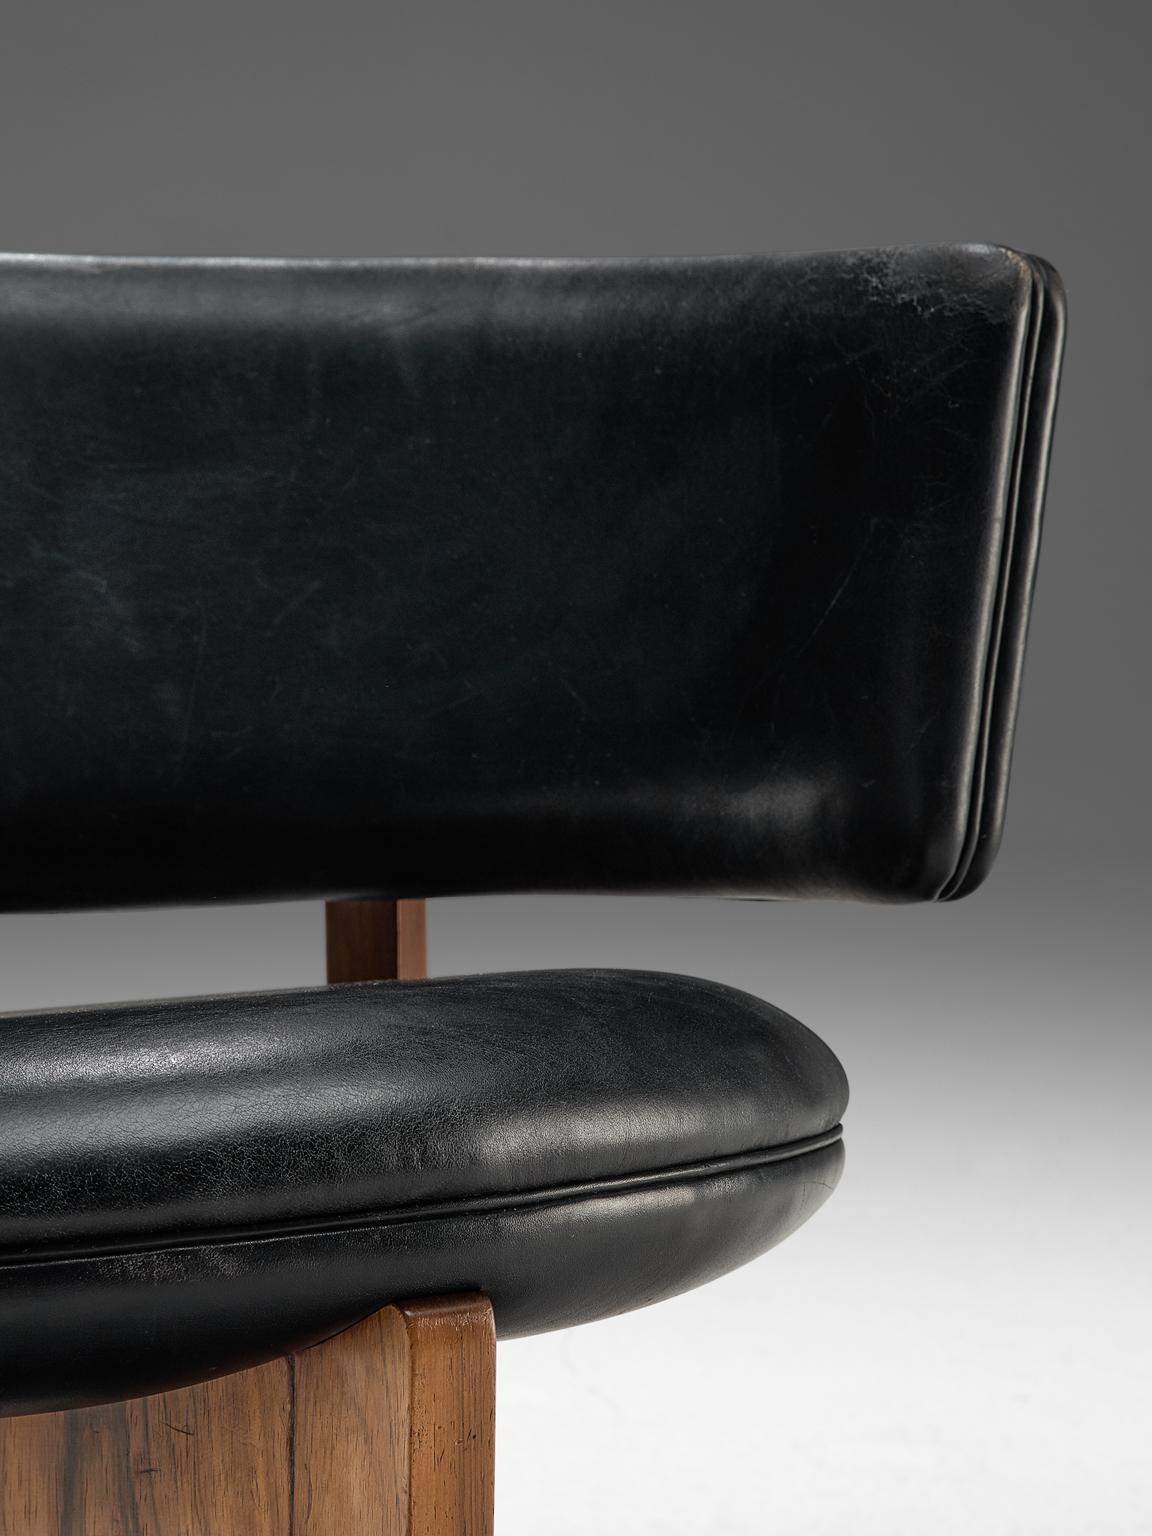 Sven Ellekaer Lounge Chair in Rosewood and Original Black Leather 1